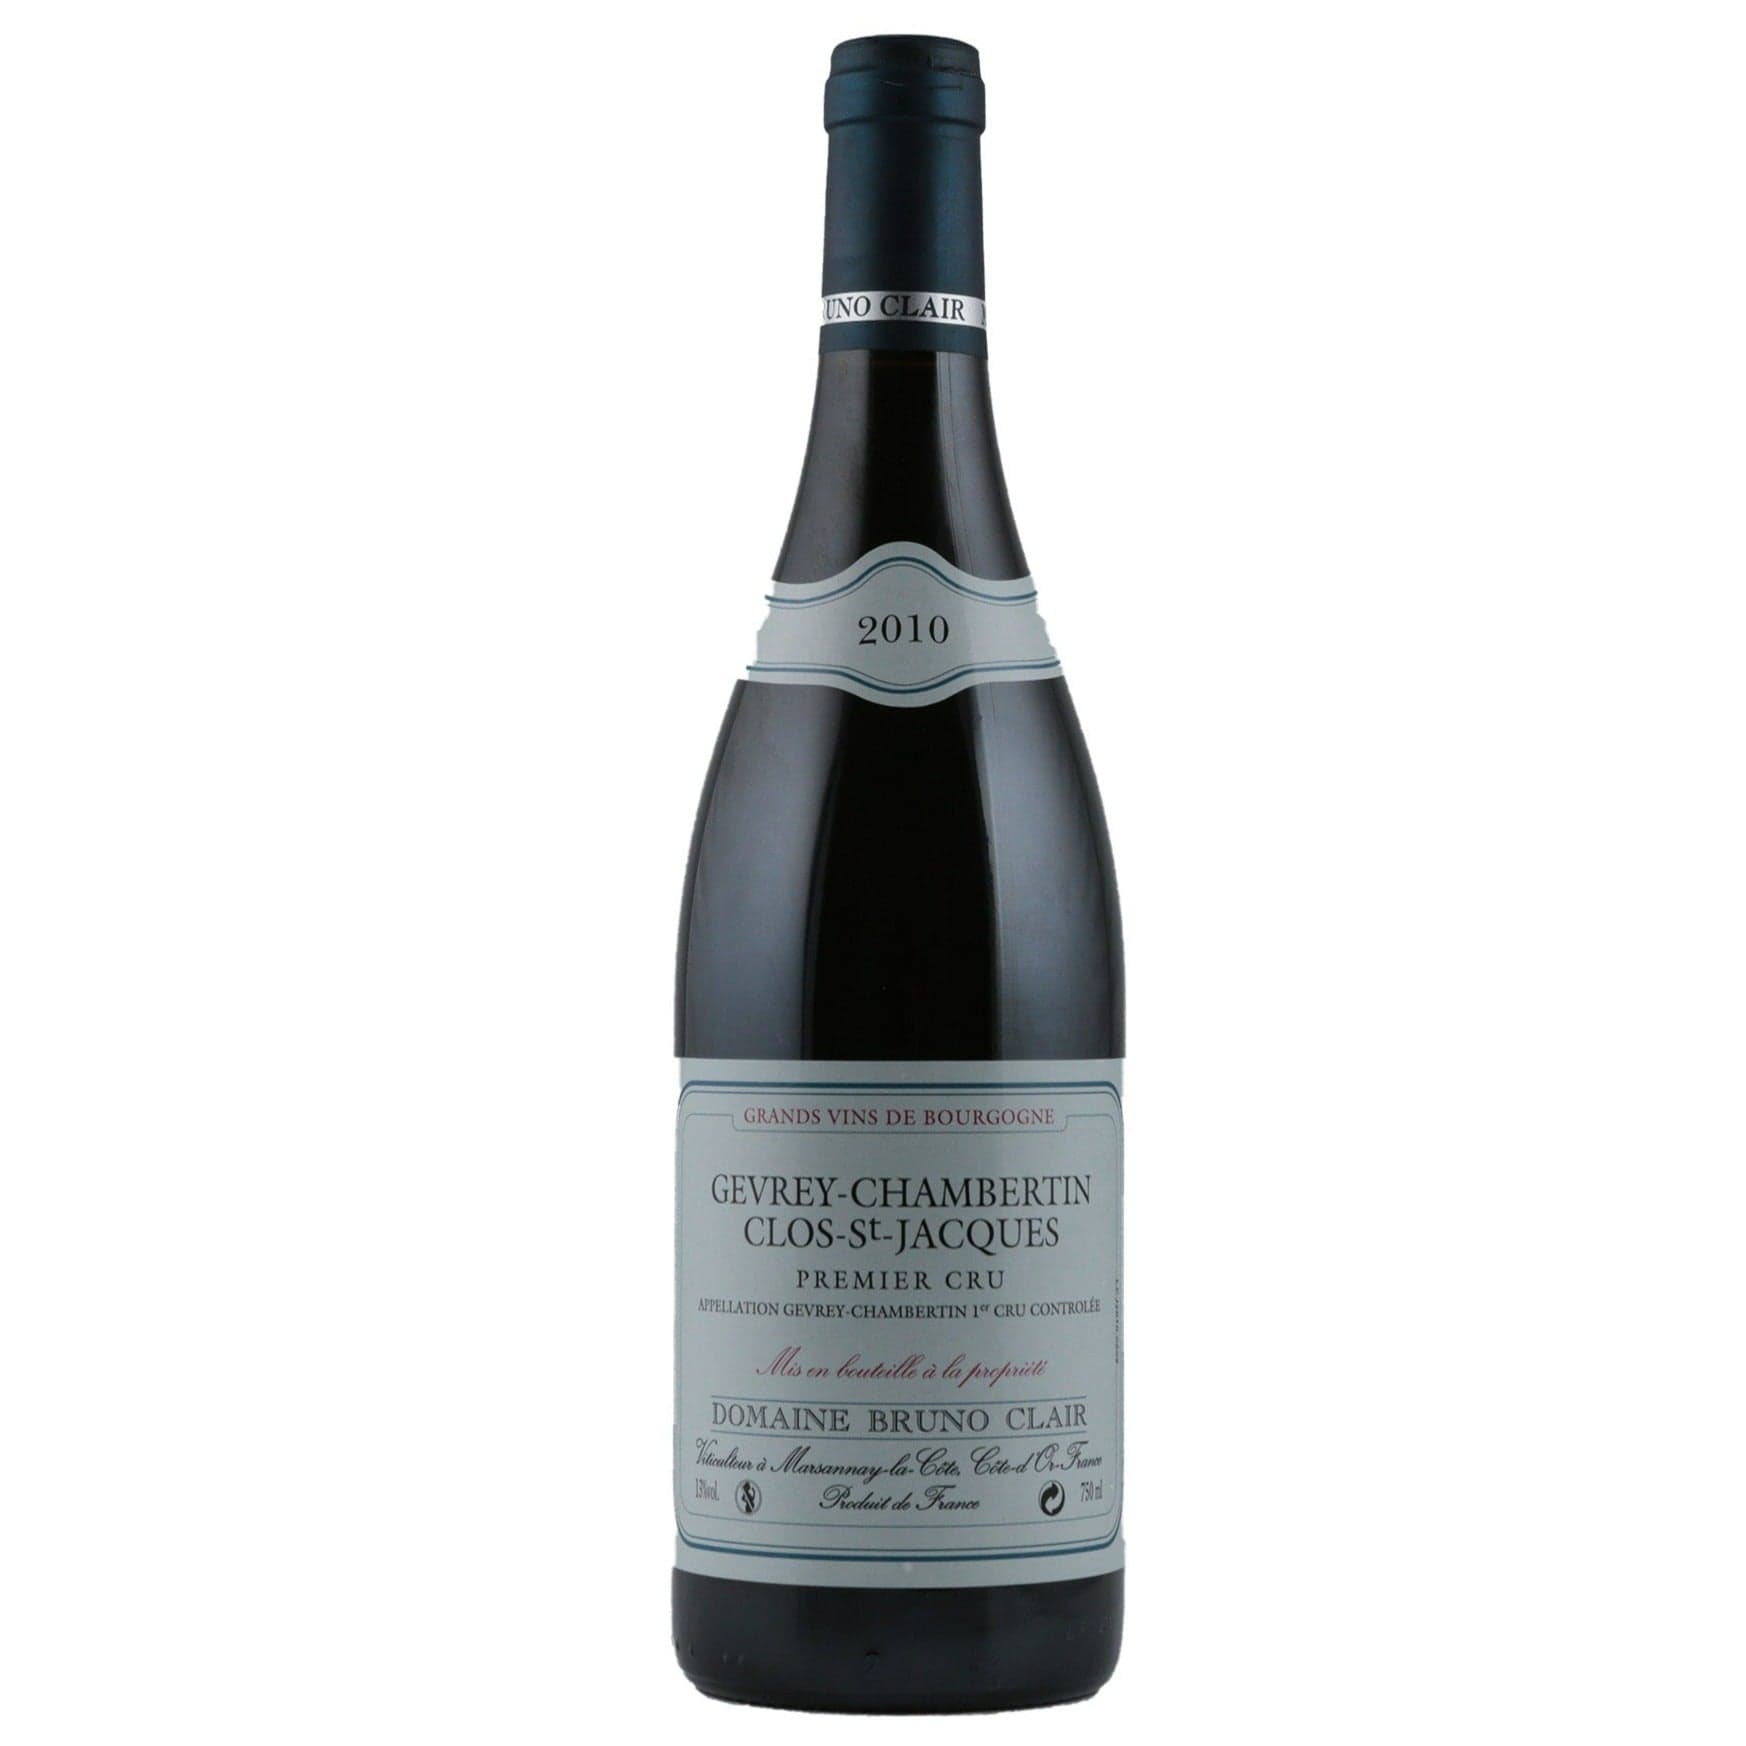 Single bottle of Red wine Dom. Bruno Clair, Gevrey Clos-Saint-Jacques, Premier Cru, 2010 100% Pinot Noir